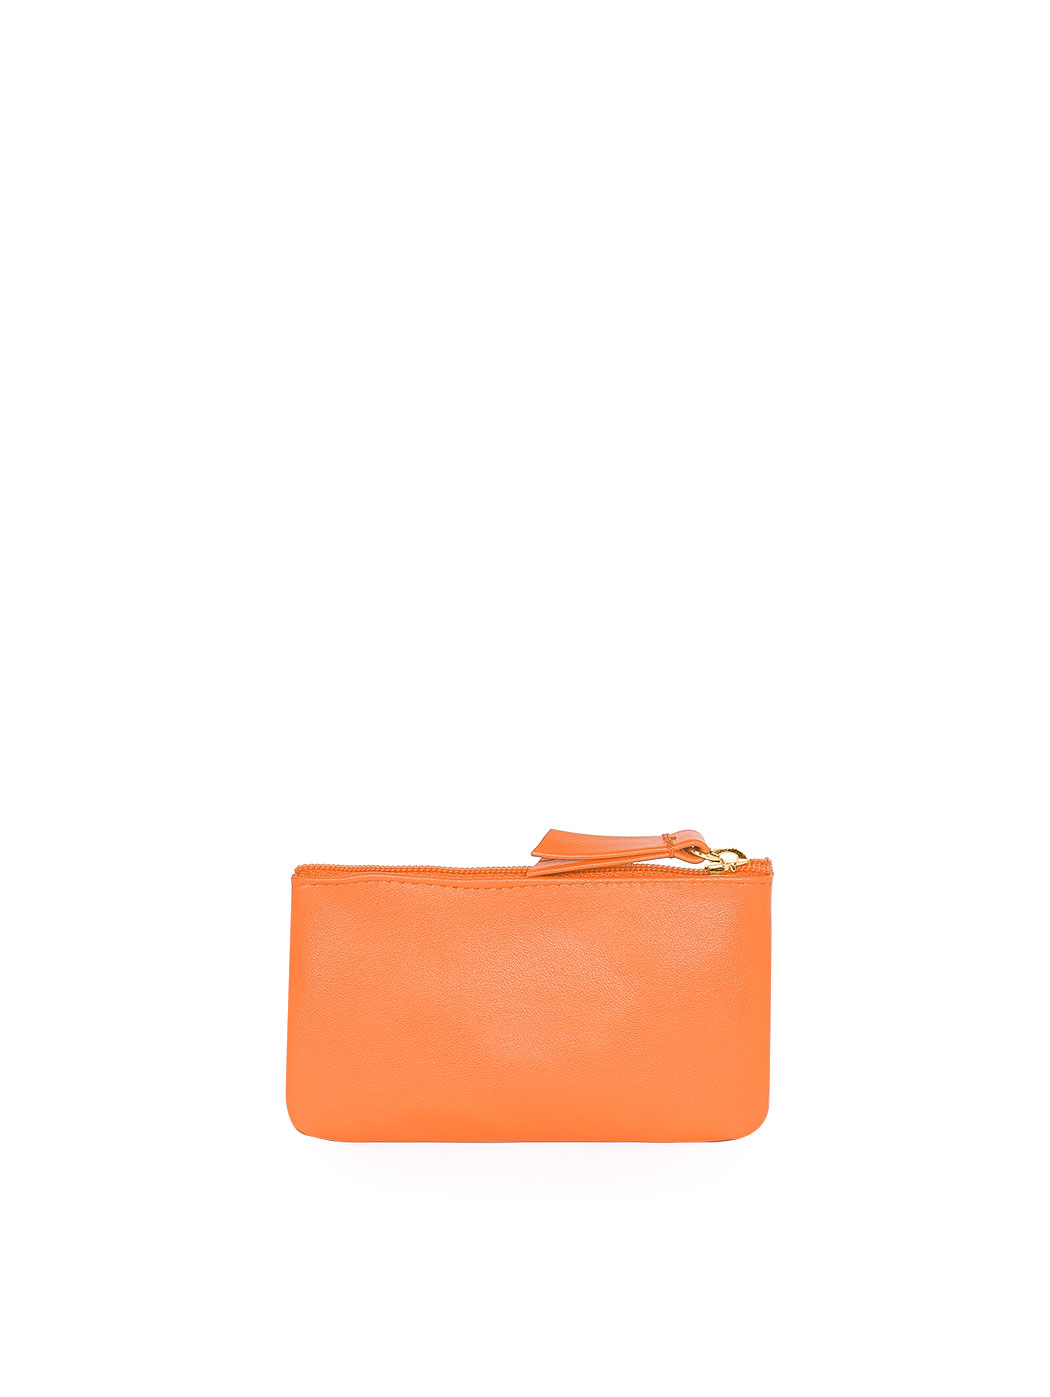 purse bag fancy multiple key metal| Alibaba.com